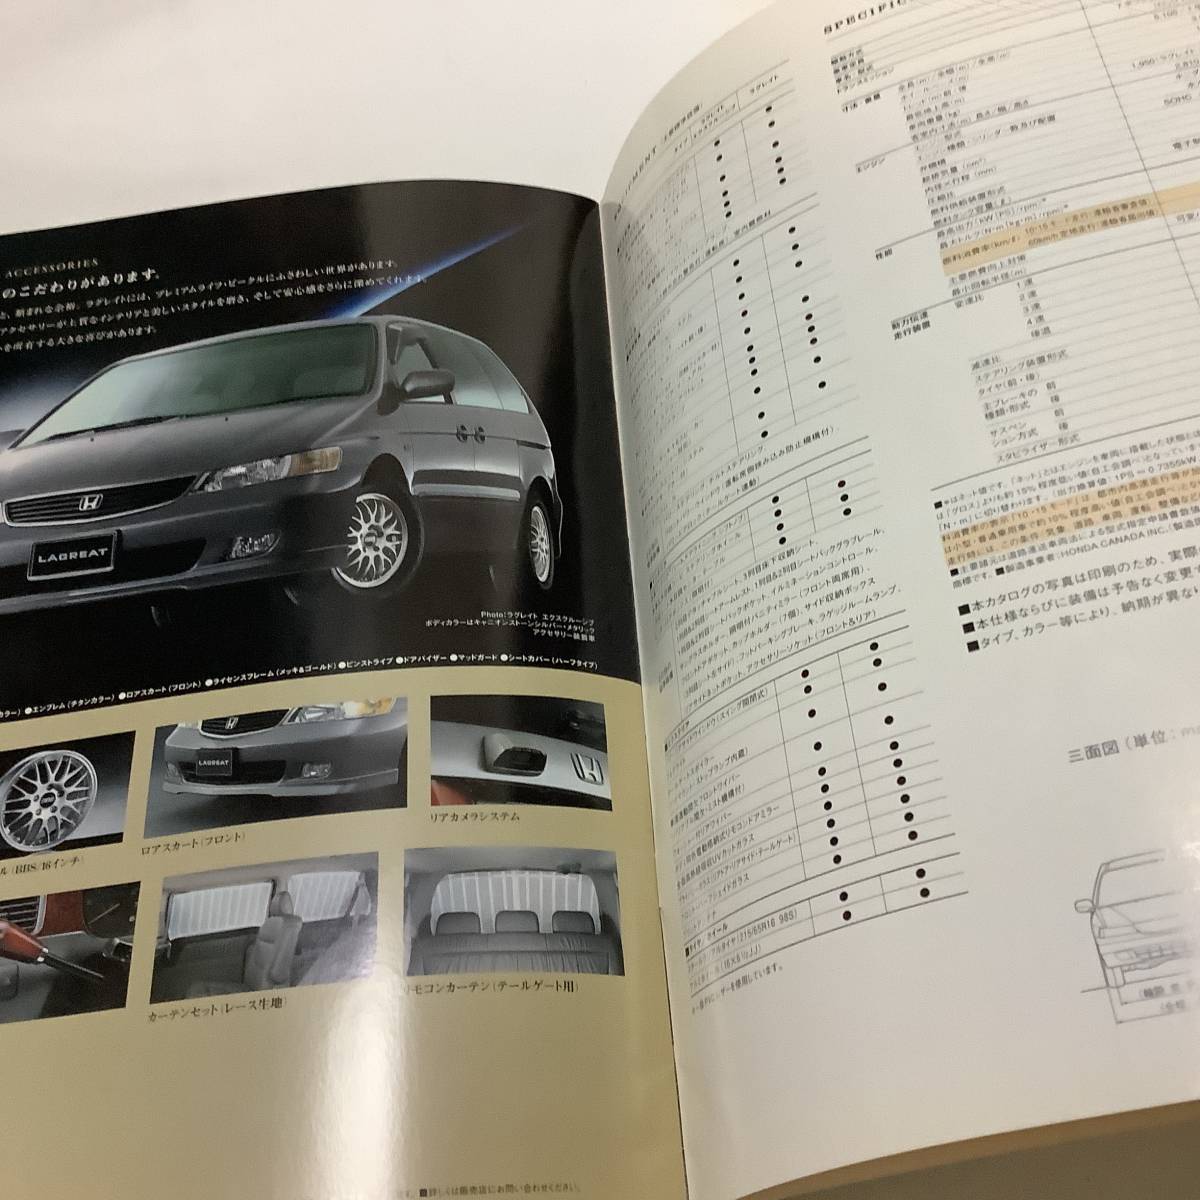  старый машина HONDA LAGREAT каталог проспект Honda Lagreat 